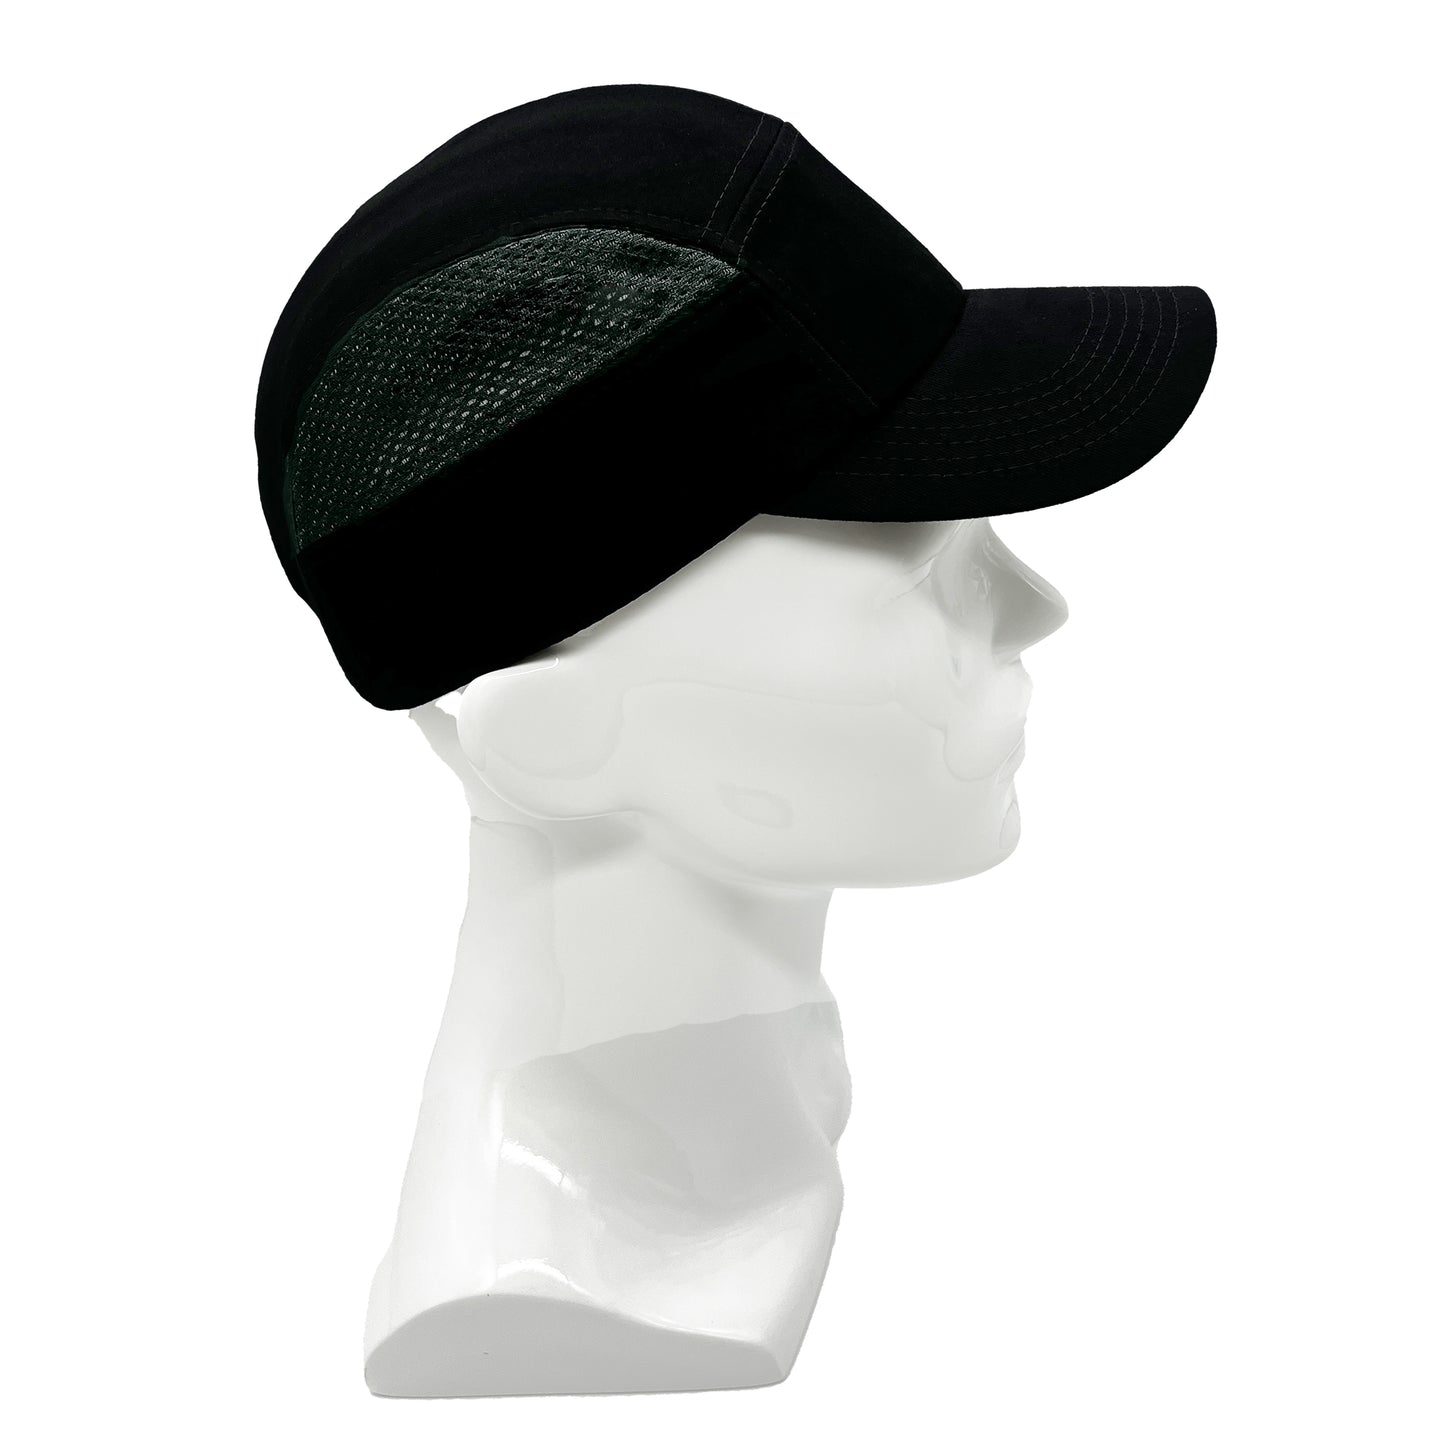 Lucent Path Mesh Black Baseball Safety Bump Cap Helmet Hard Hat Head Protection Cap for Men Women